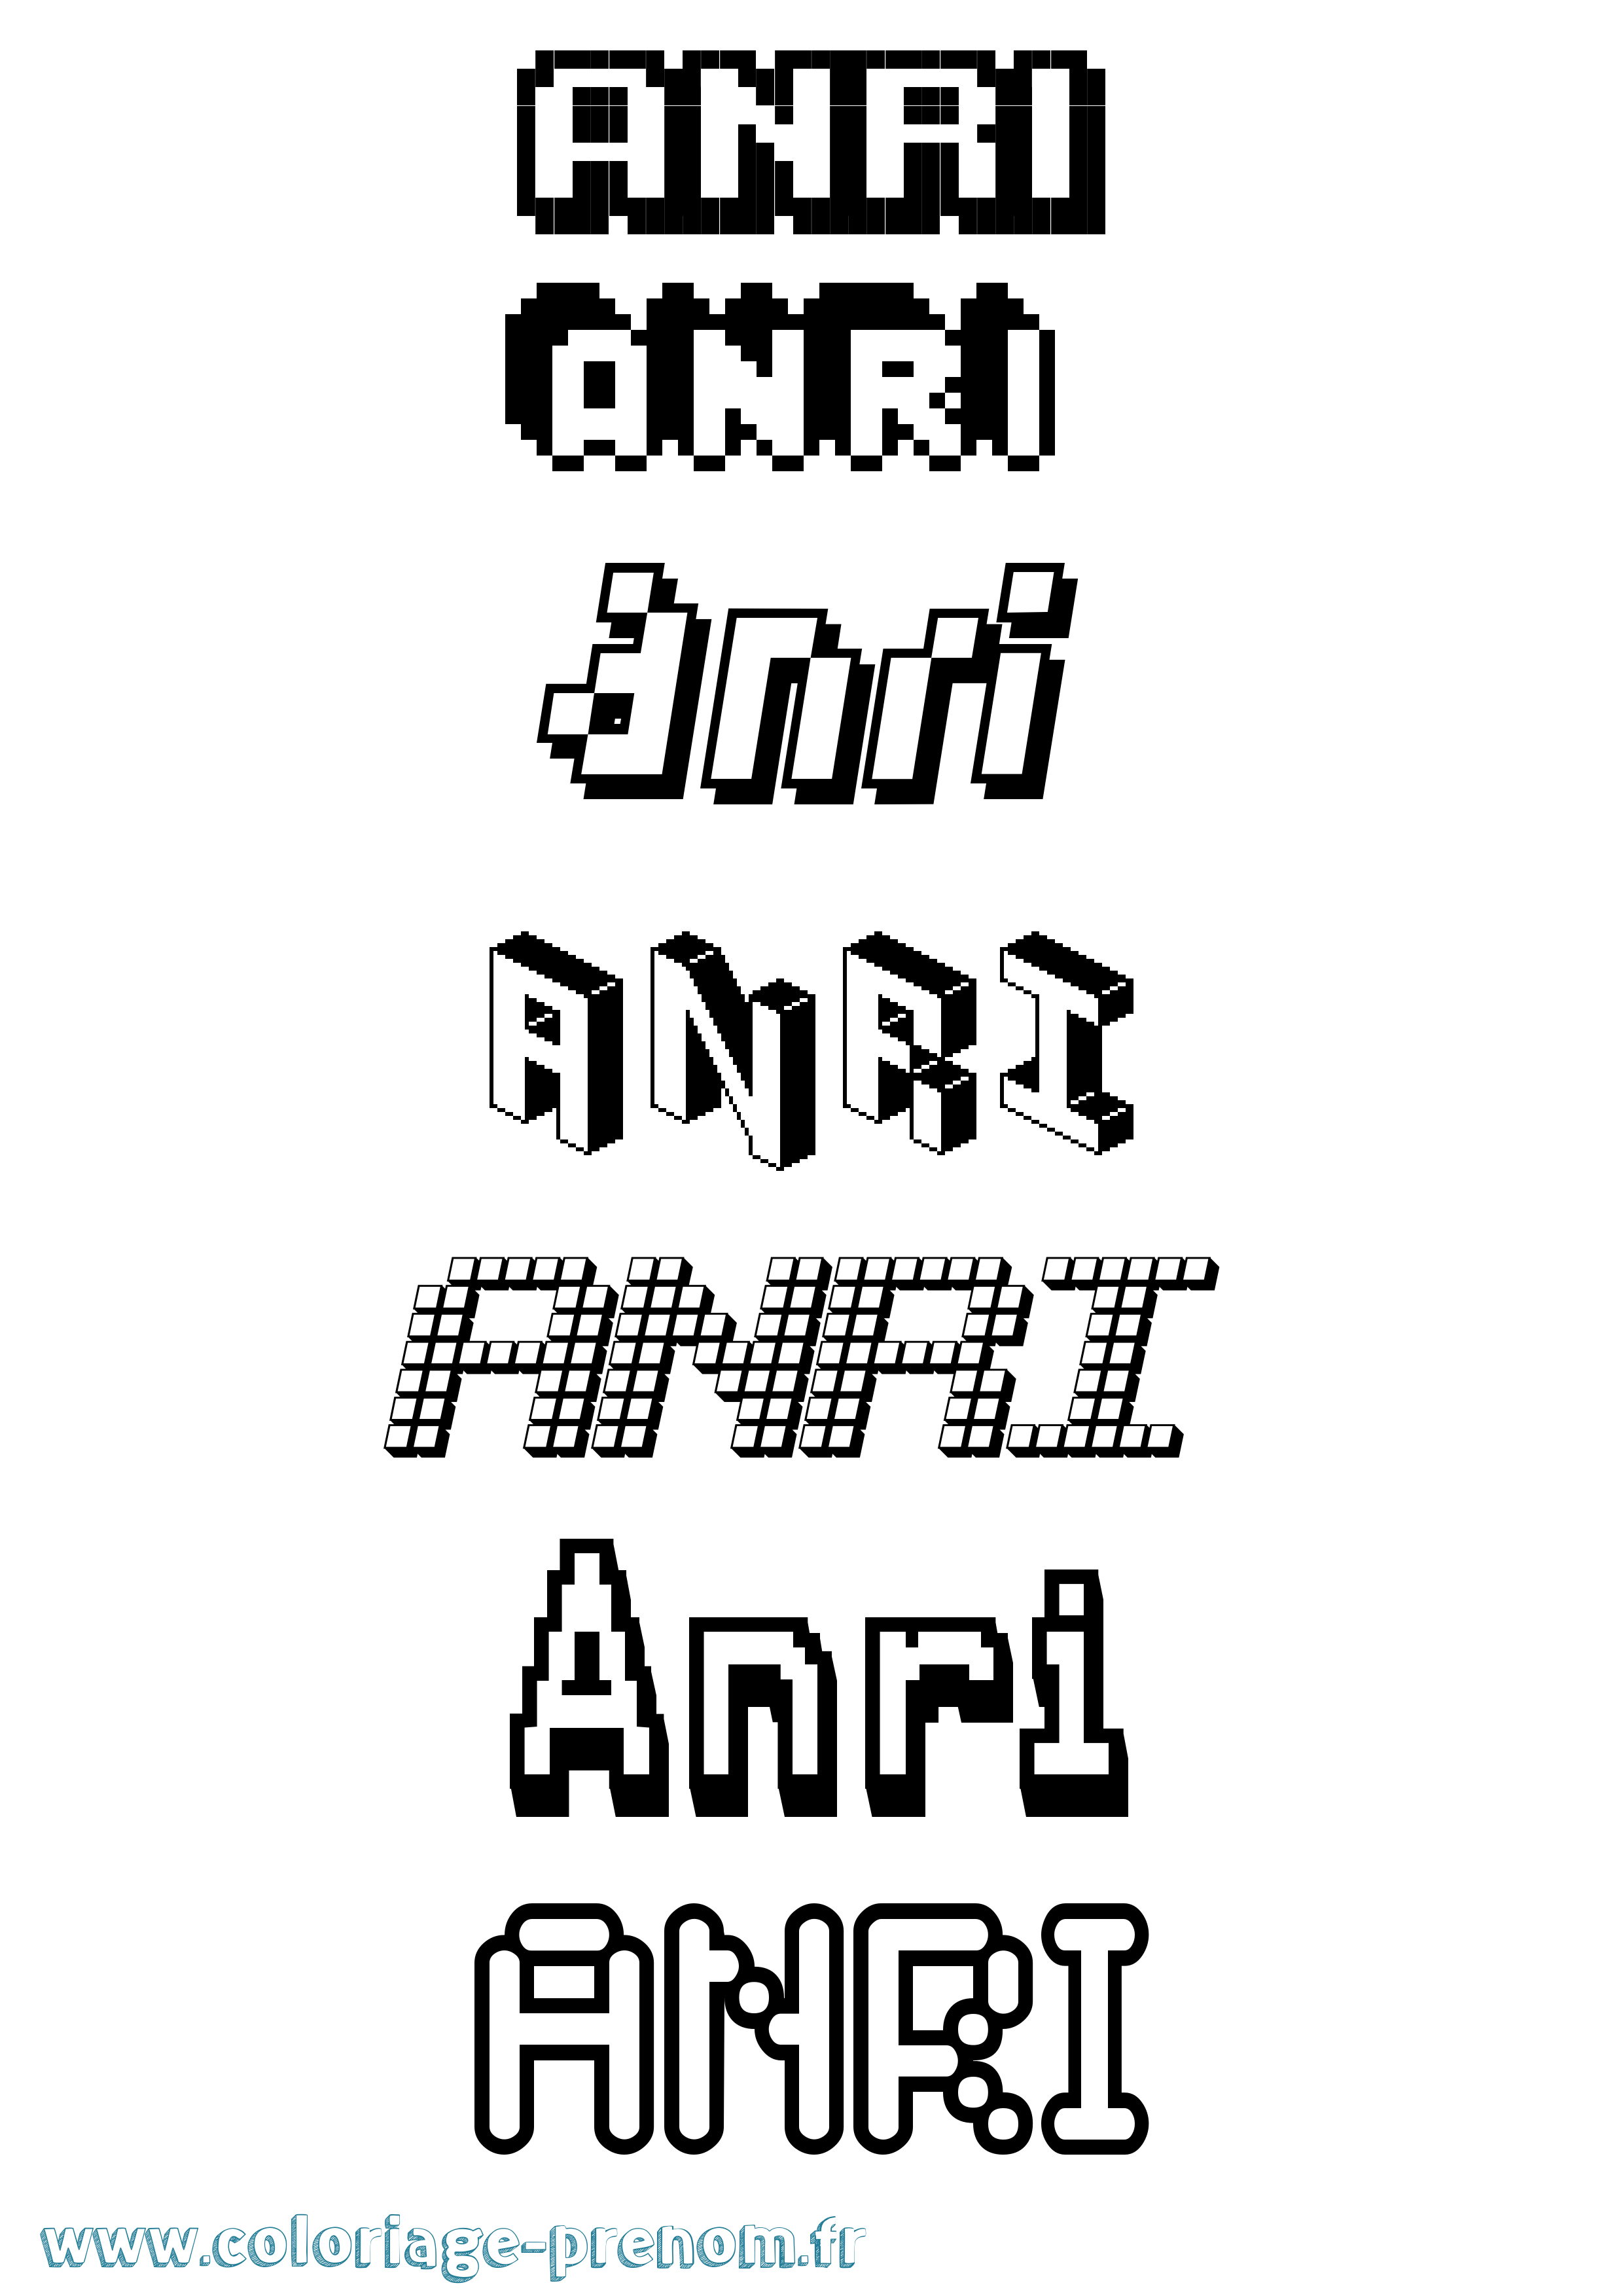 Coloriage prénom Anri Pixel